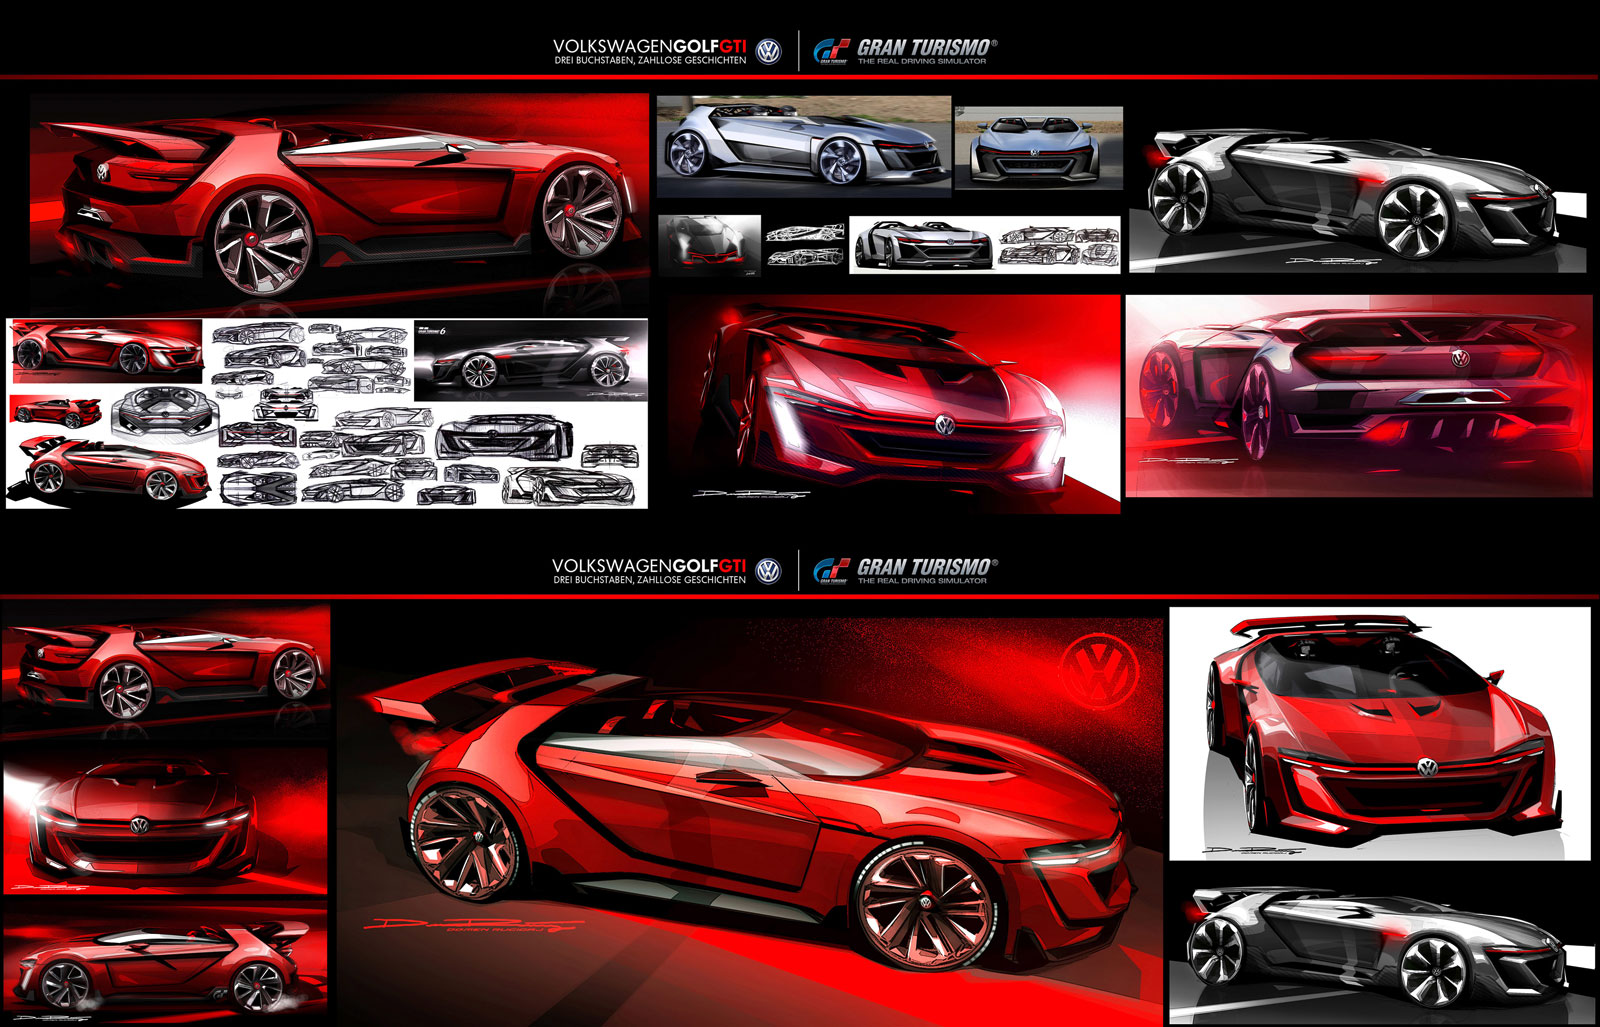 Volkswagen GTI Roadster Vision Gran Turismo (2014) - Design Sketches